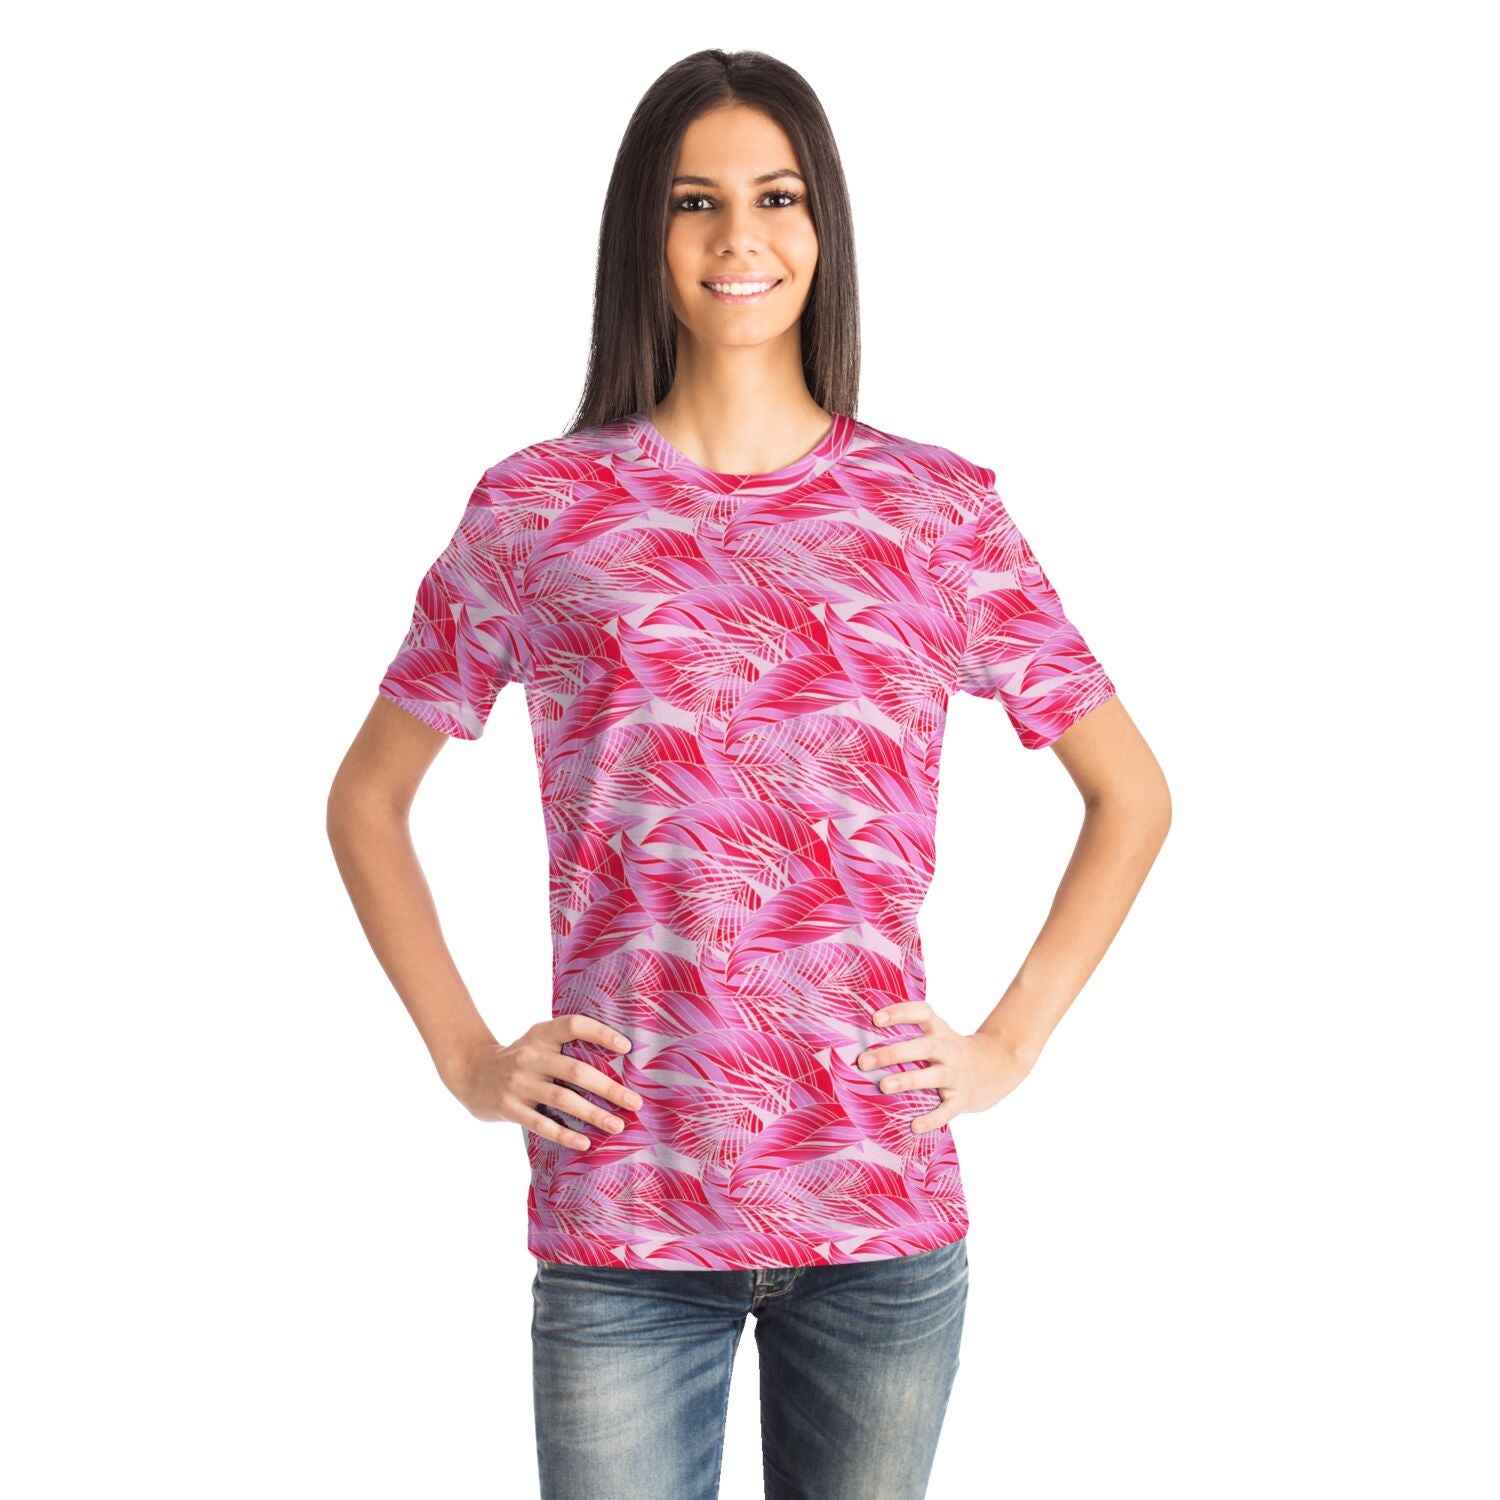 Rad Palm Tropical Pink Unisex T-Shirt